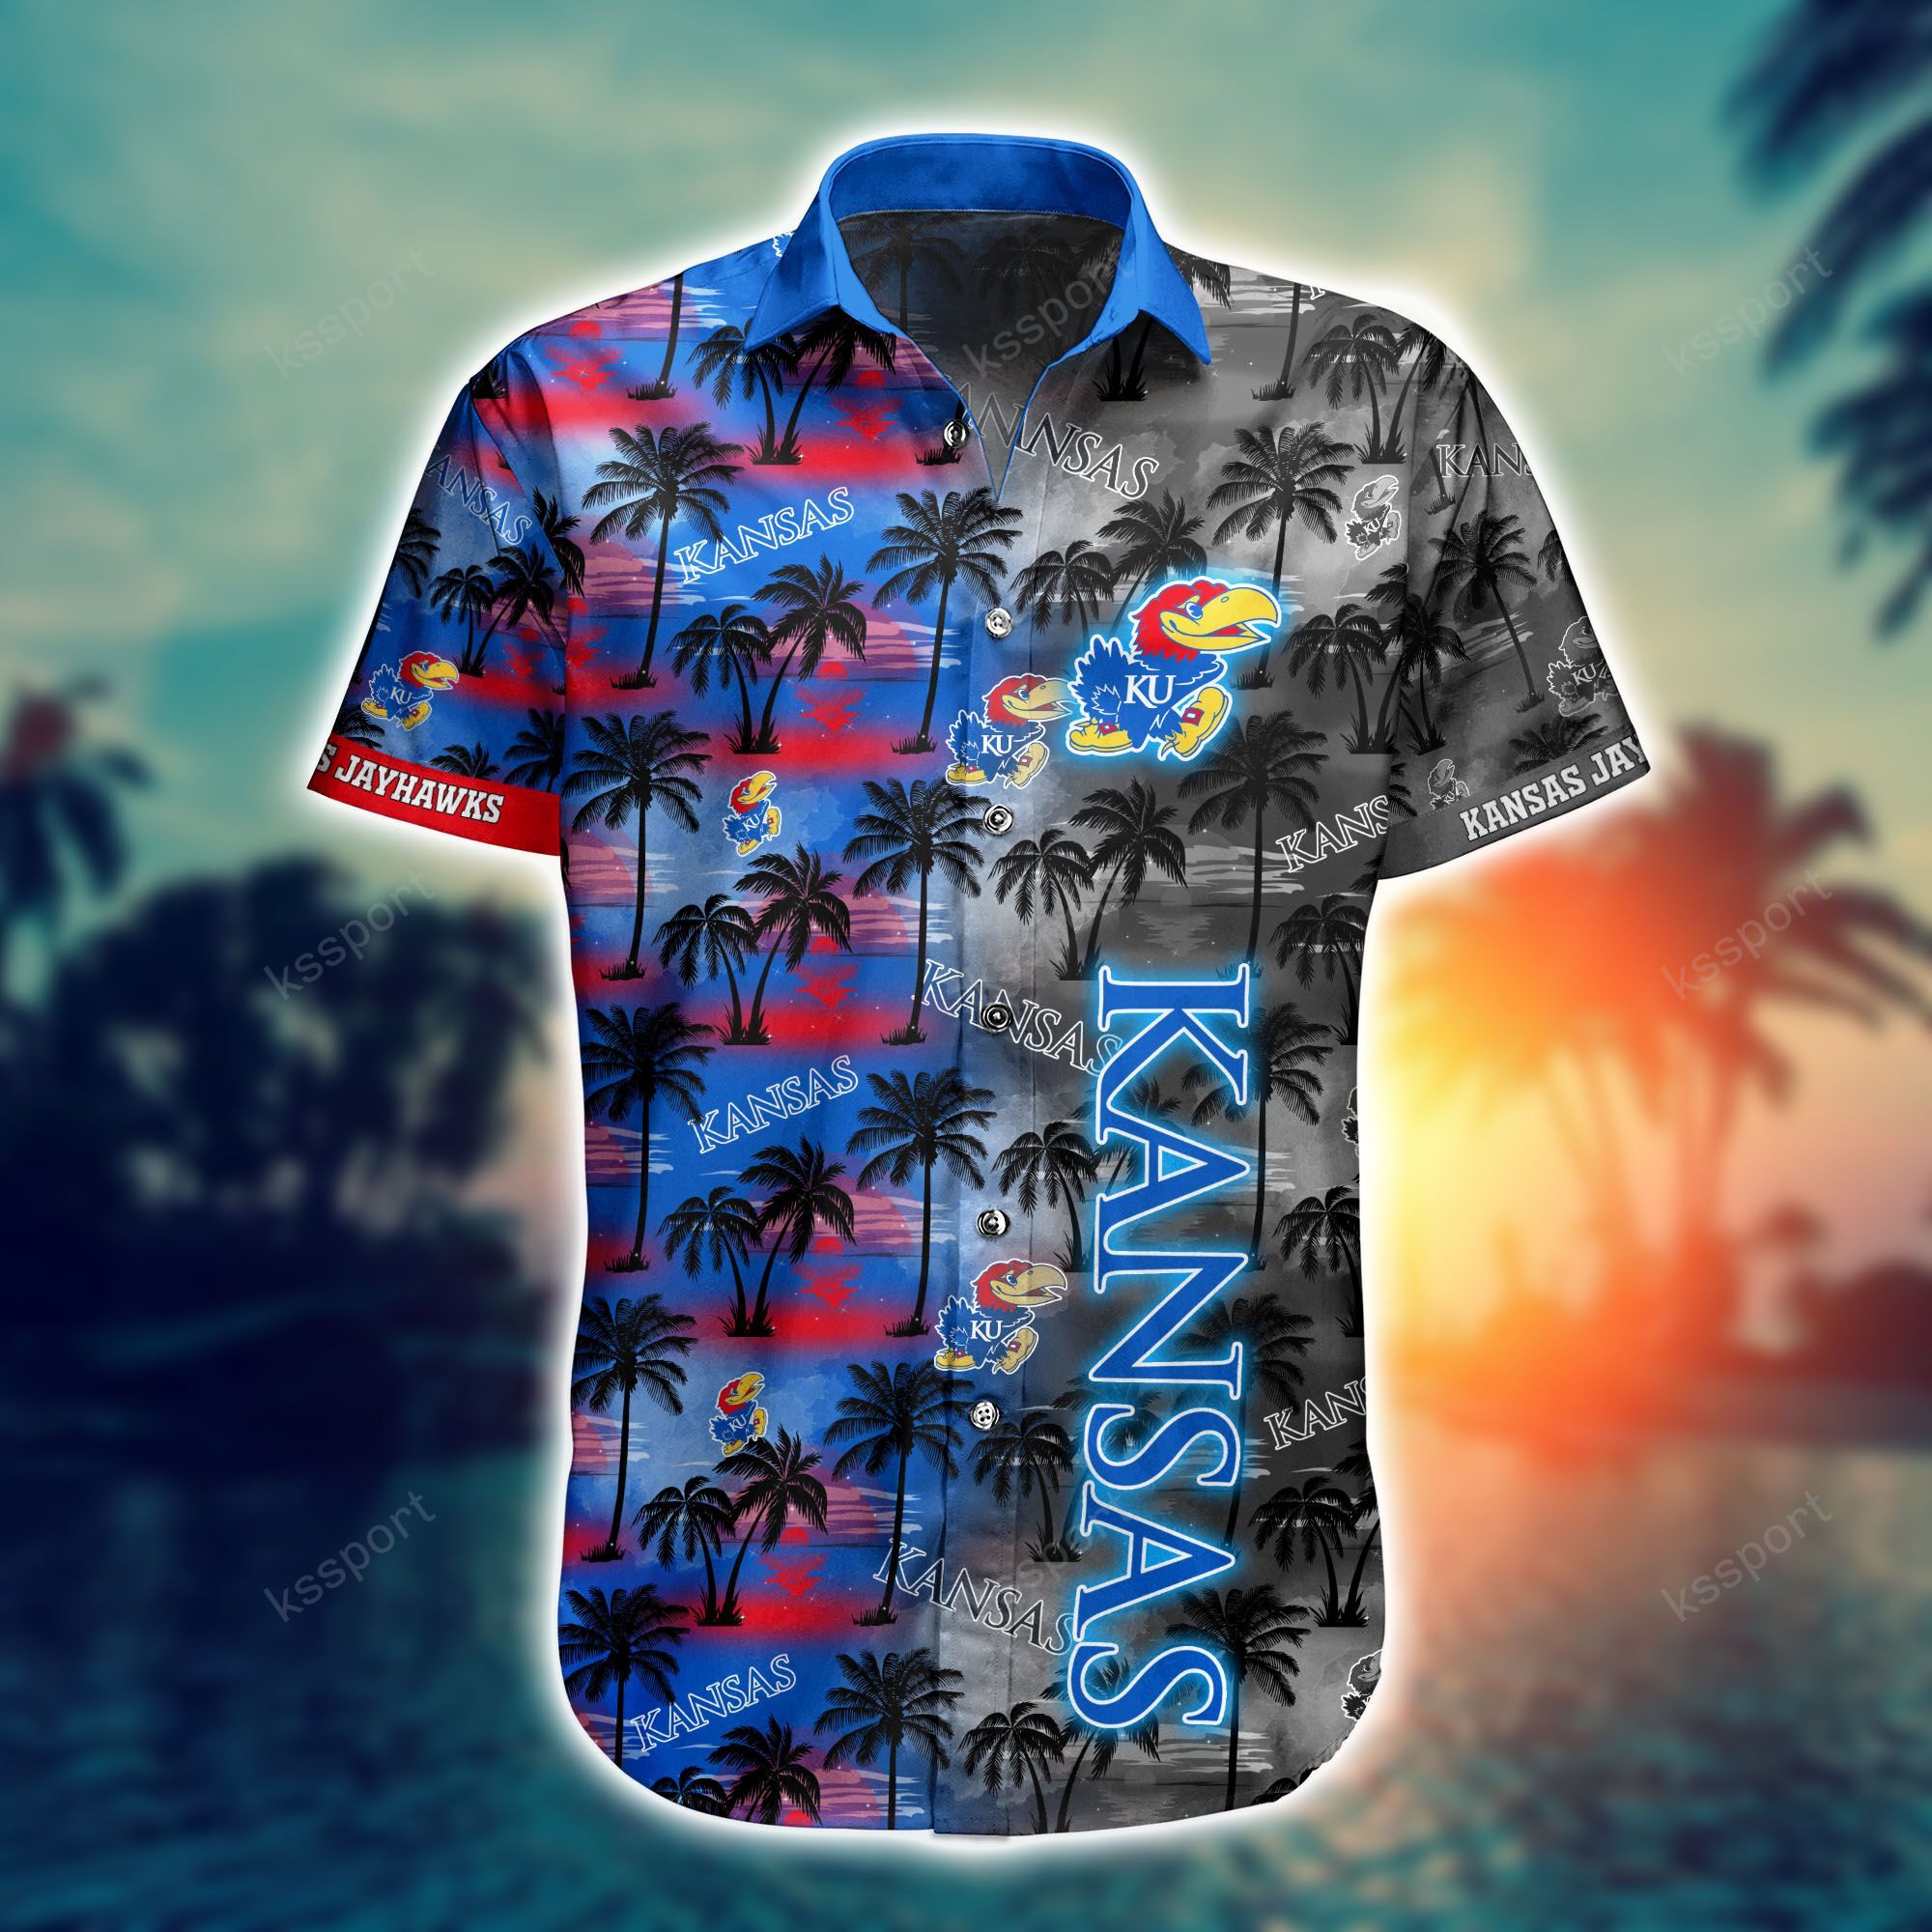 Hawaiian shirt and shorts is a great way to look stylish at a beach party 70